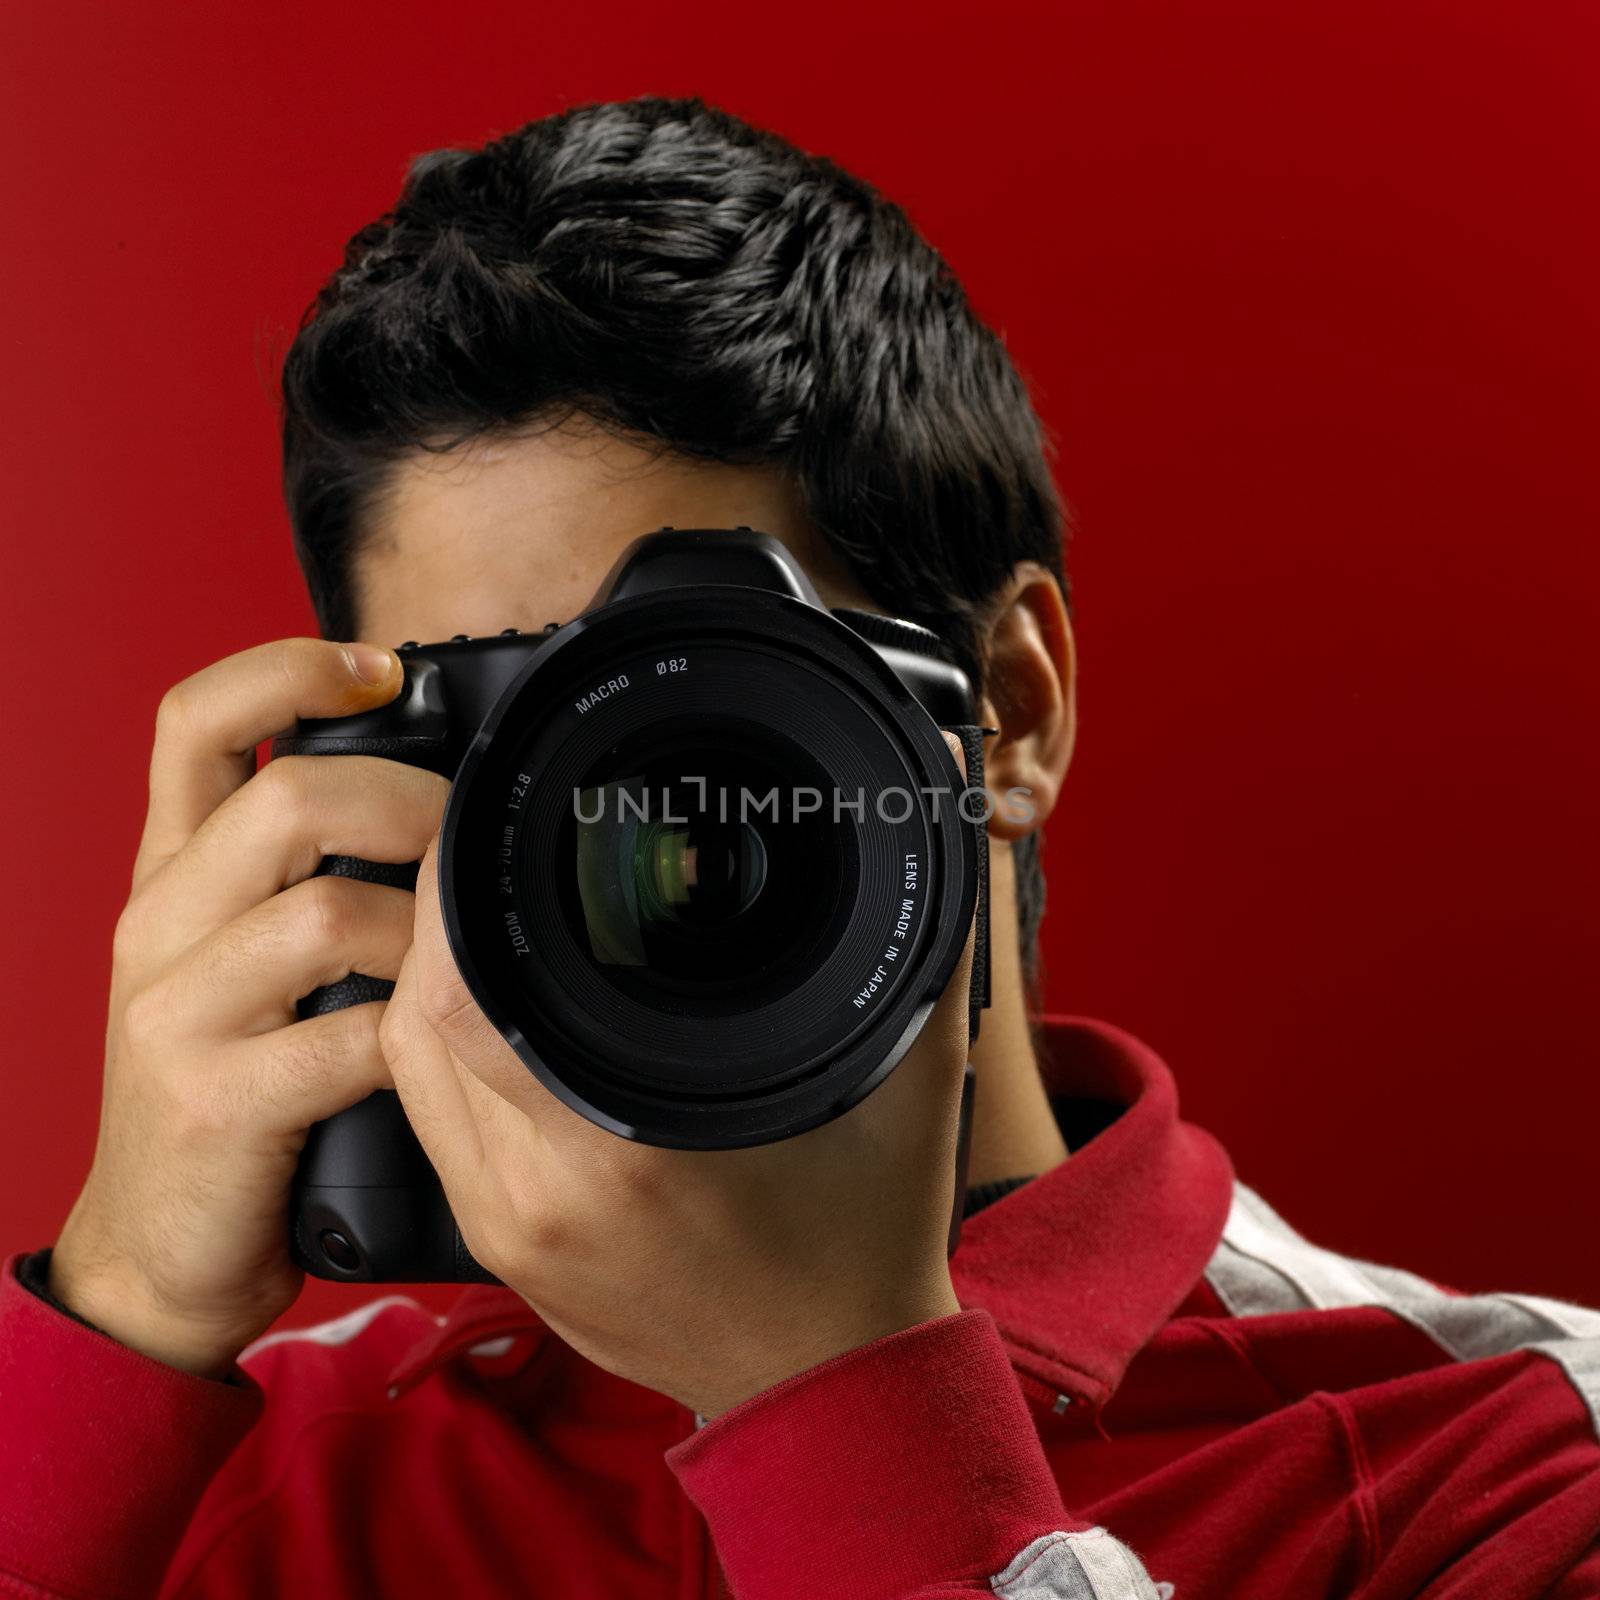 Photographer on red. Shallow DOF. Focus on Lens.